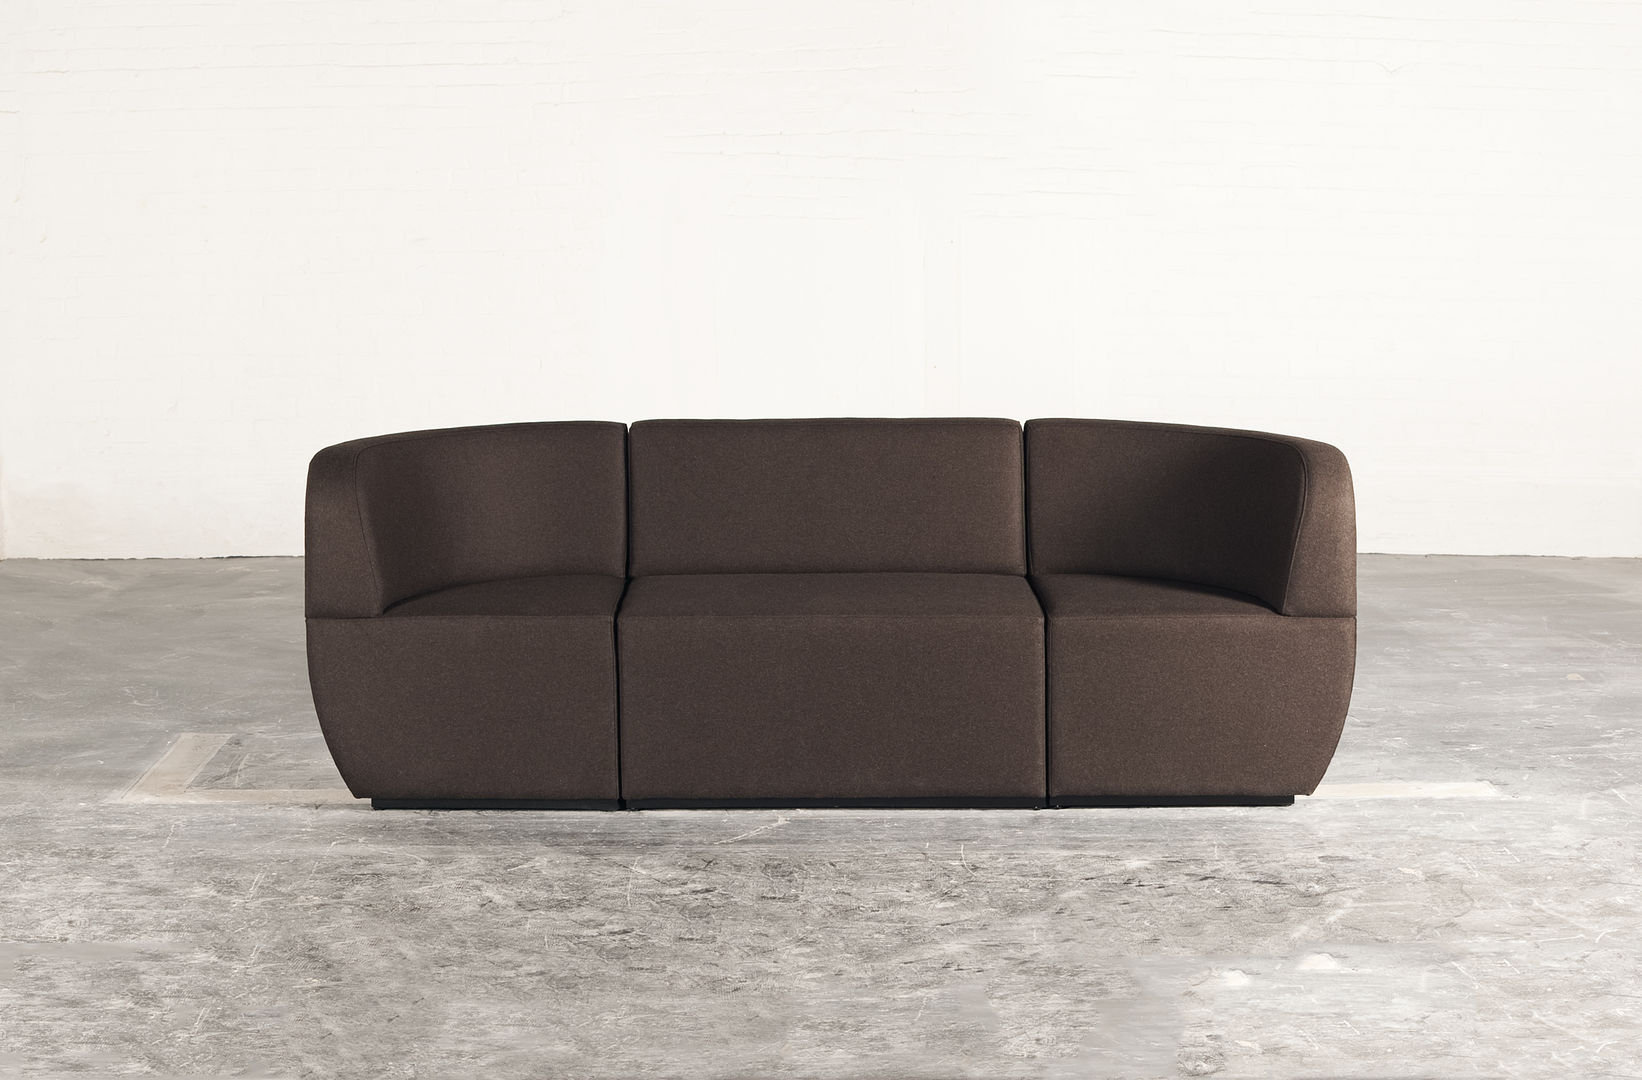 Cosmo - 3 seater couch Studio Lulo Nowoczesny salon Kanapy i fotele